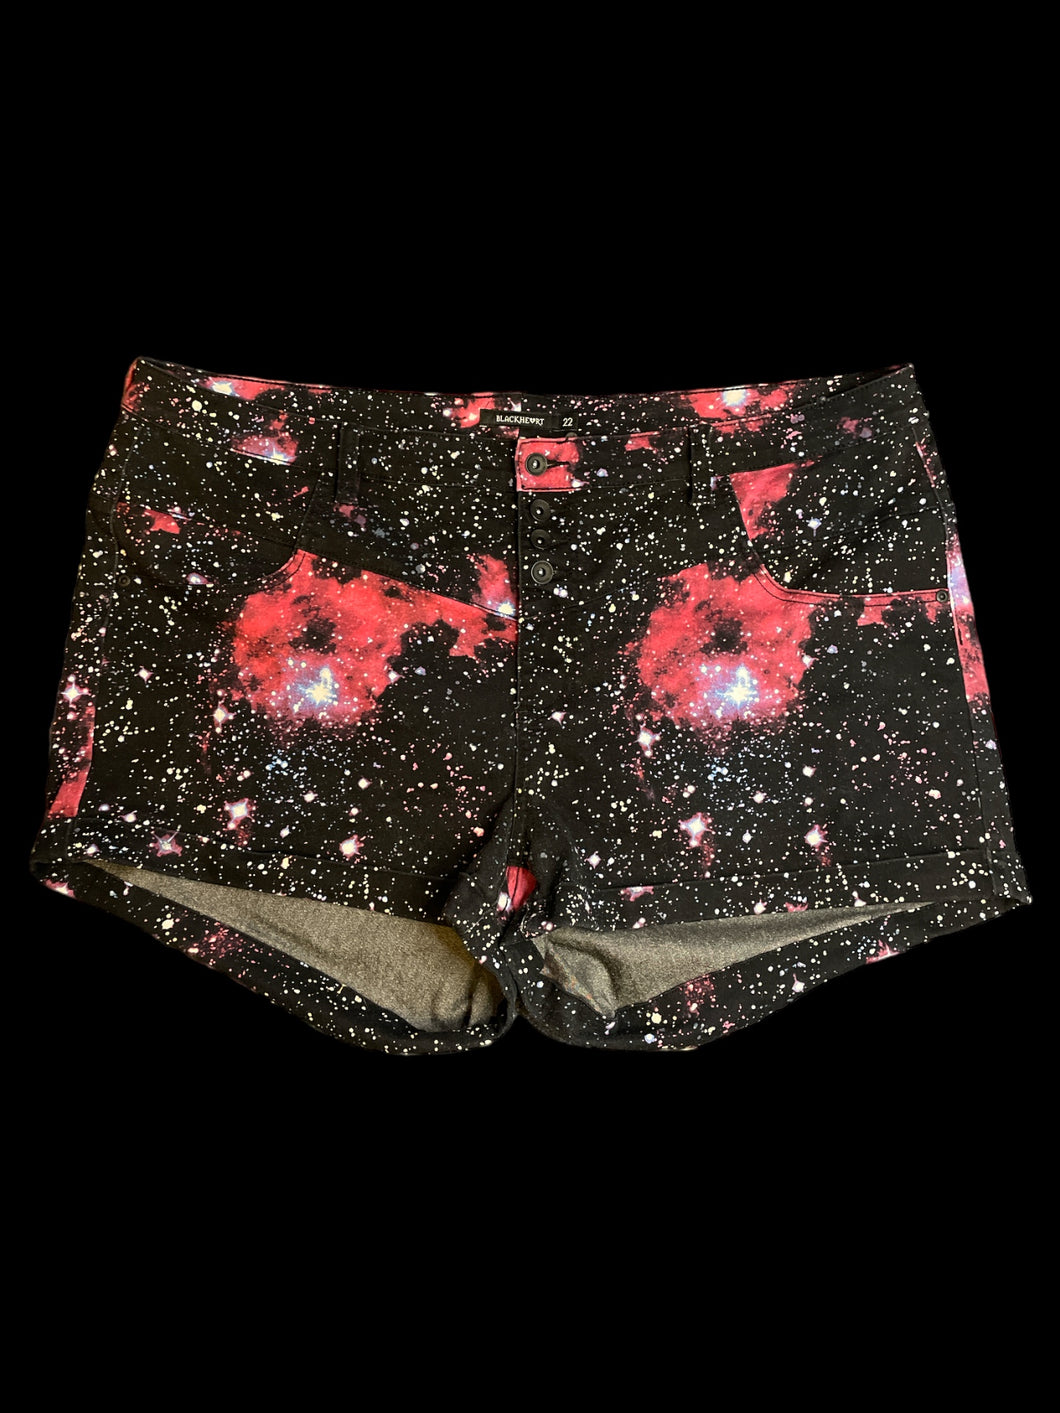 2X Black, pink, & white galaxy print high waist shorts w/ folded cuffs, belt loops, pockets, & four button/zipper closure